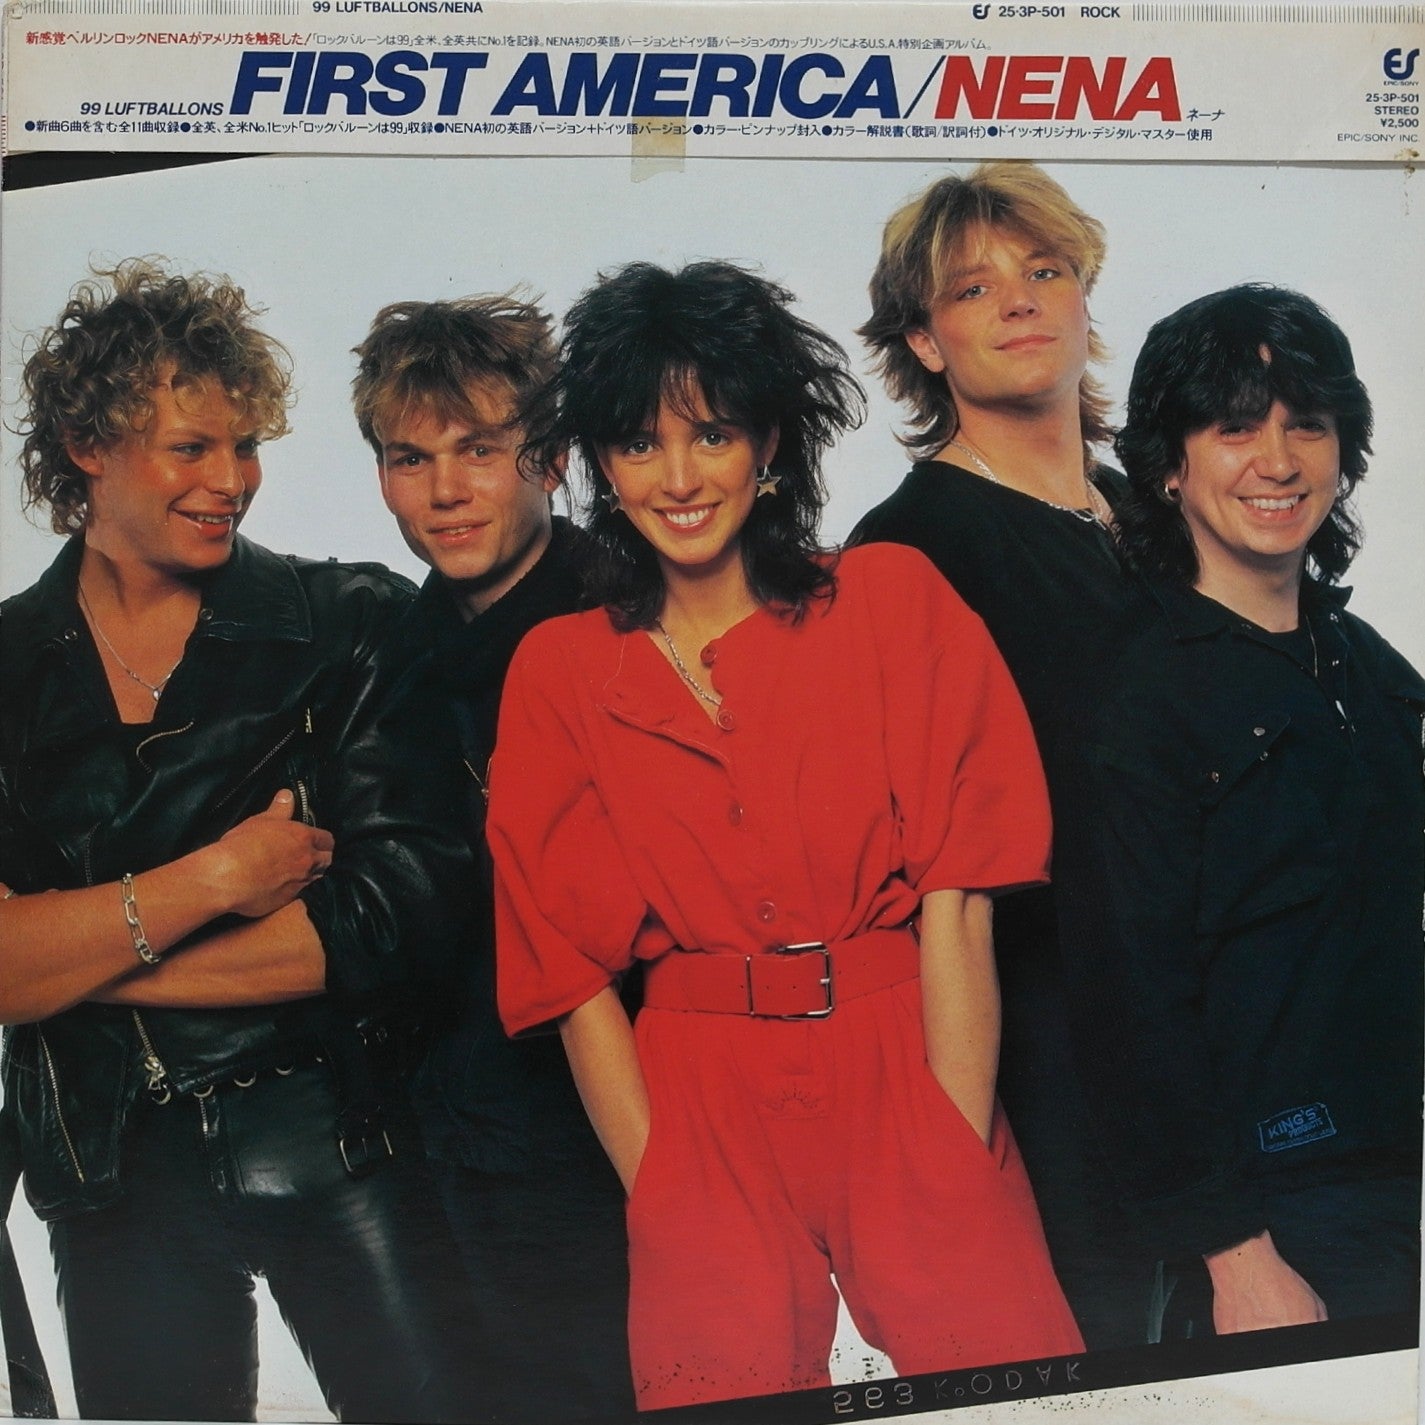 NENA - First America (99 Luftballons)